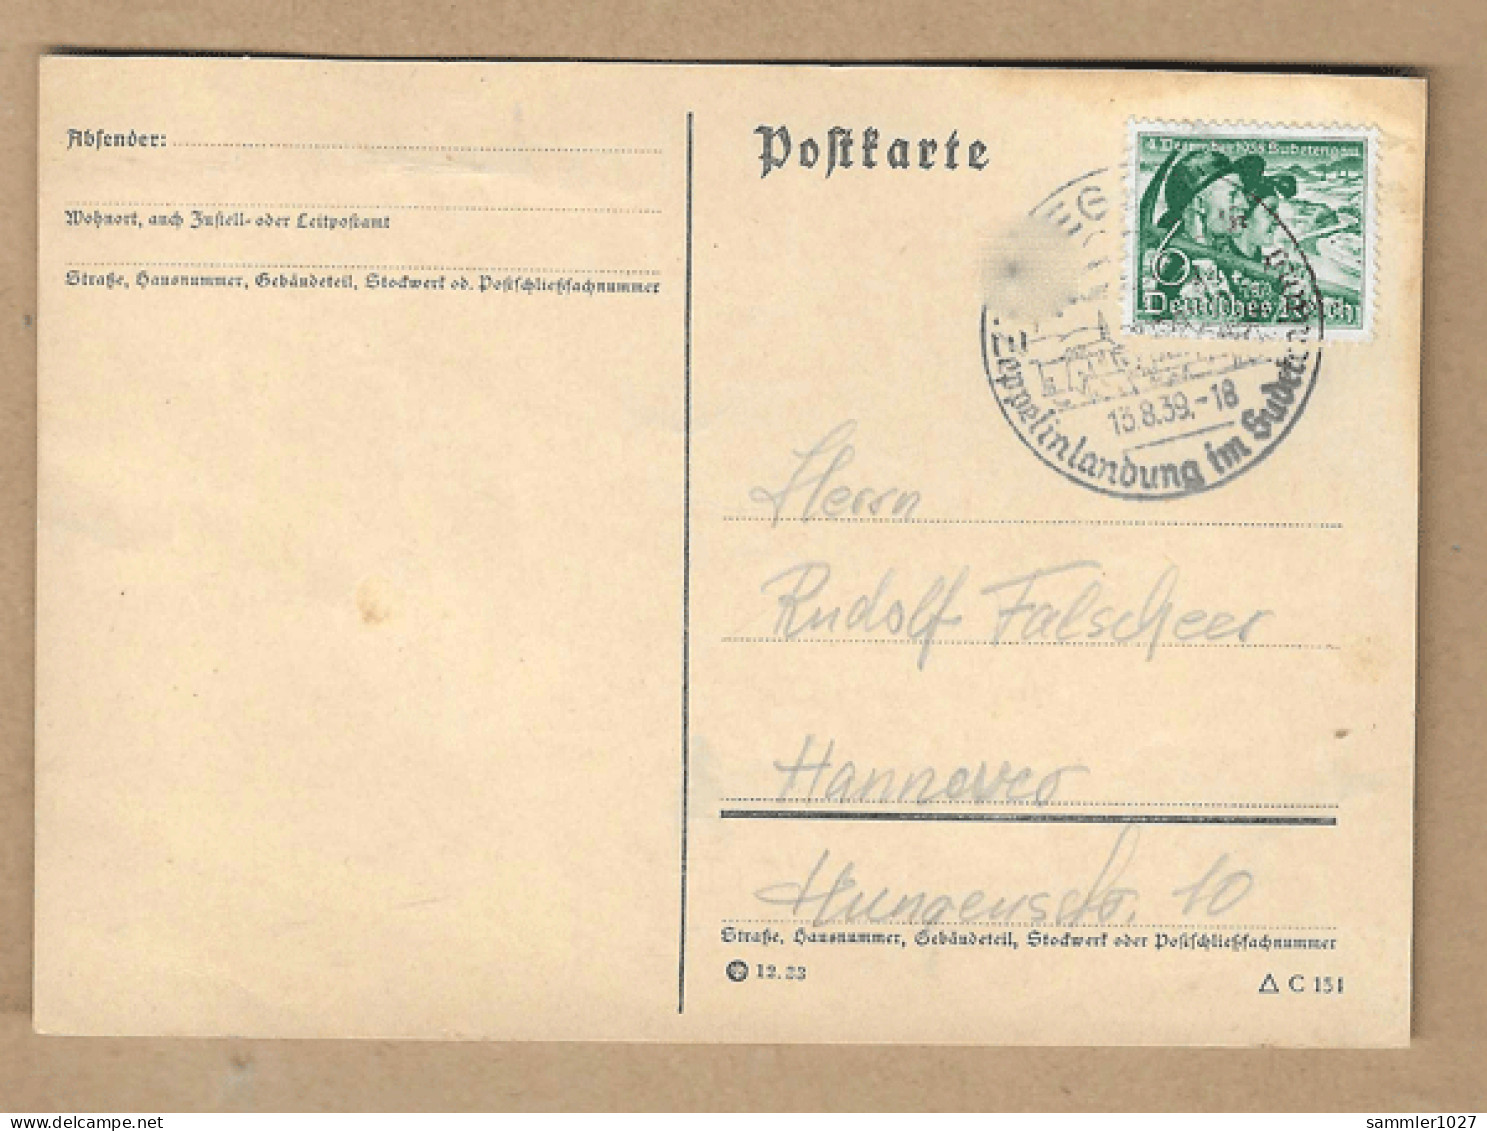 Los Vom 18905 -   Postkarte Aus Eger 1939  Zeppelinsonderstempel - Covers & Documents